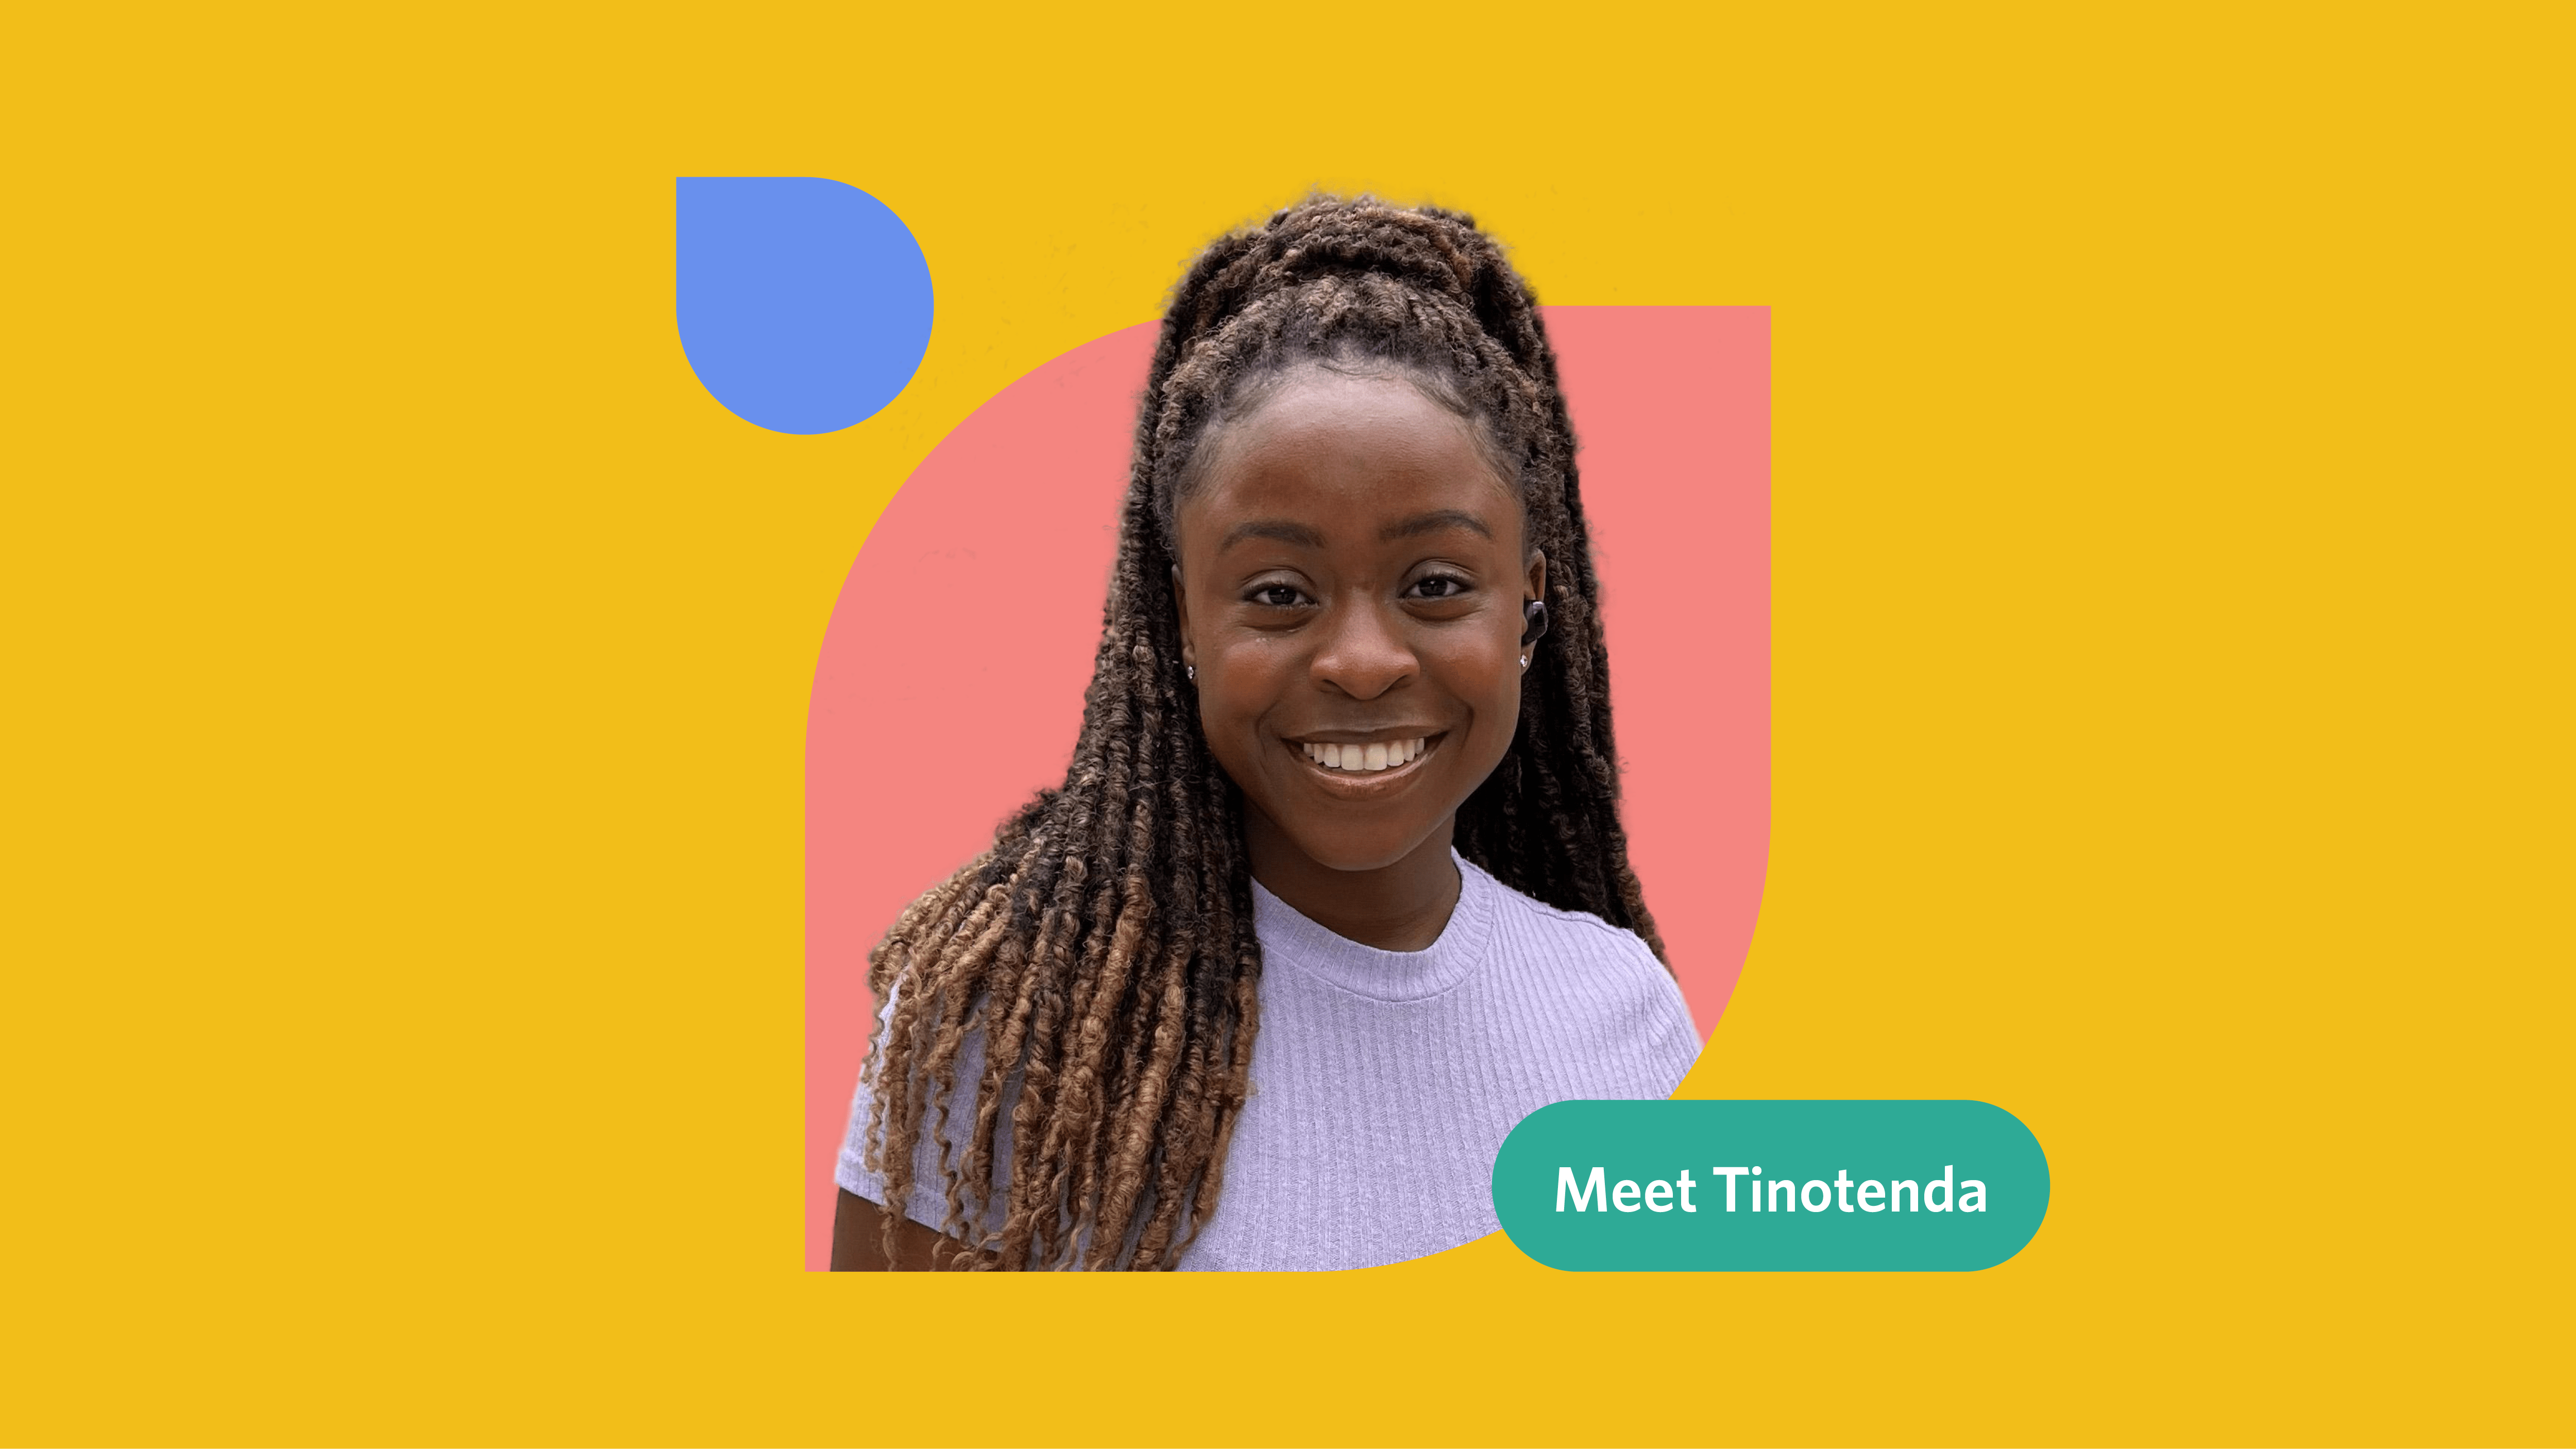 Yellow, pink, and blue graphic with a photo of Tinotenda Masvikeni with the text "Meet Tinotenda"